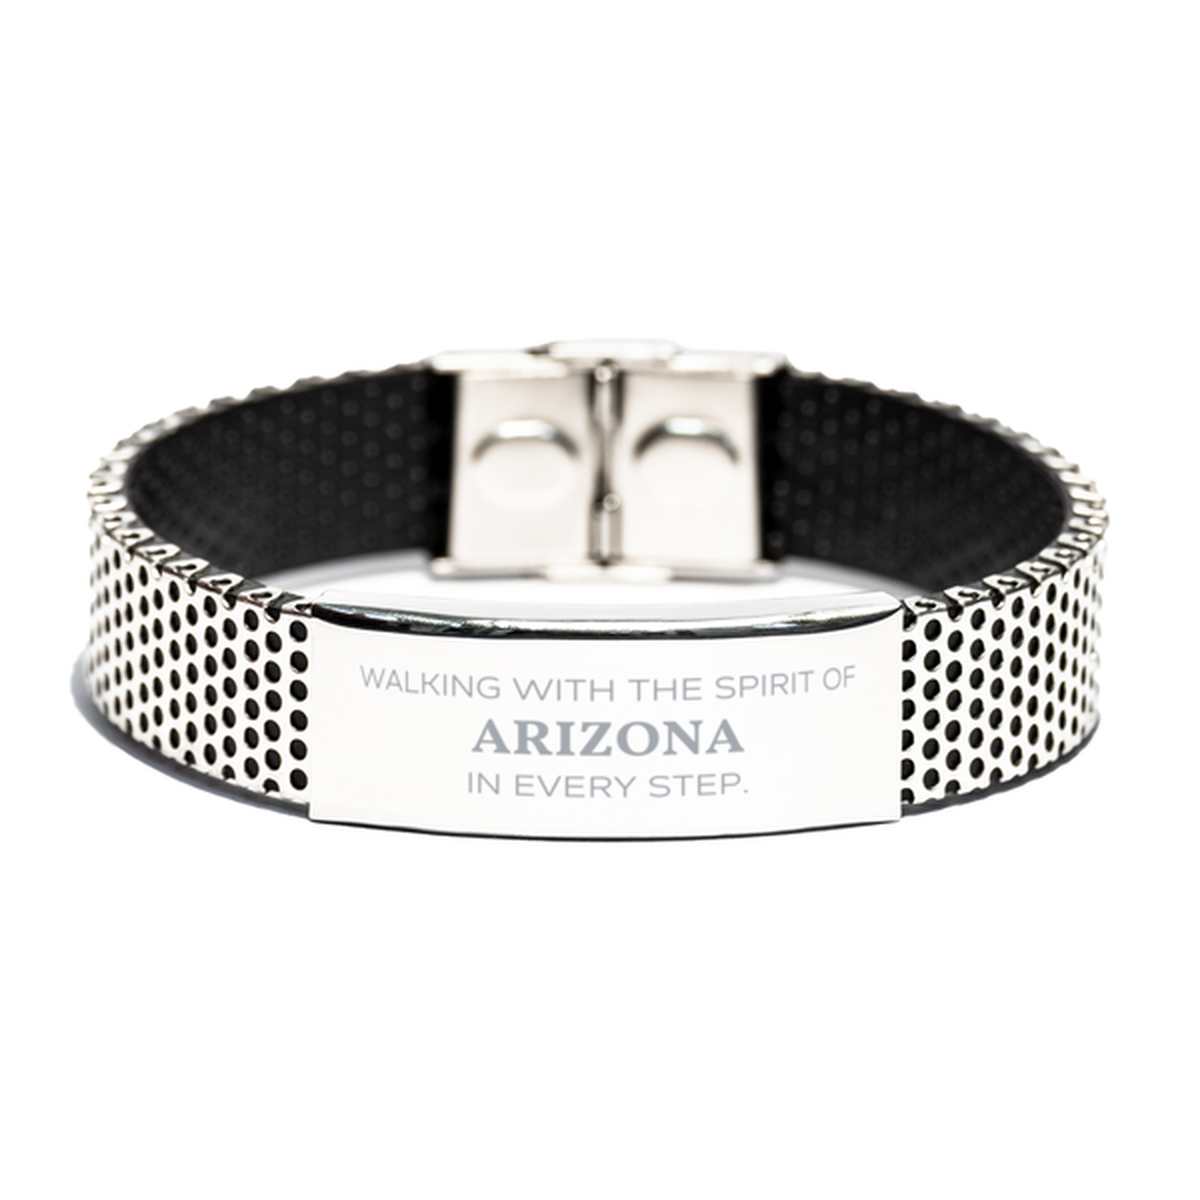 Arizona Gifts, Walking with the spirit, Love Arizona Birthday Christmas Stainless Steel Bracelet For Arizona People, Men, Women, Friends